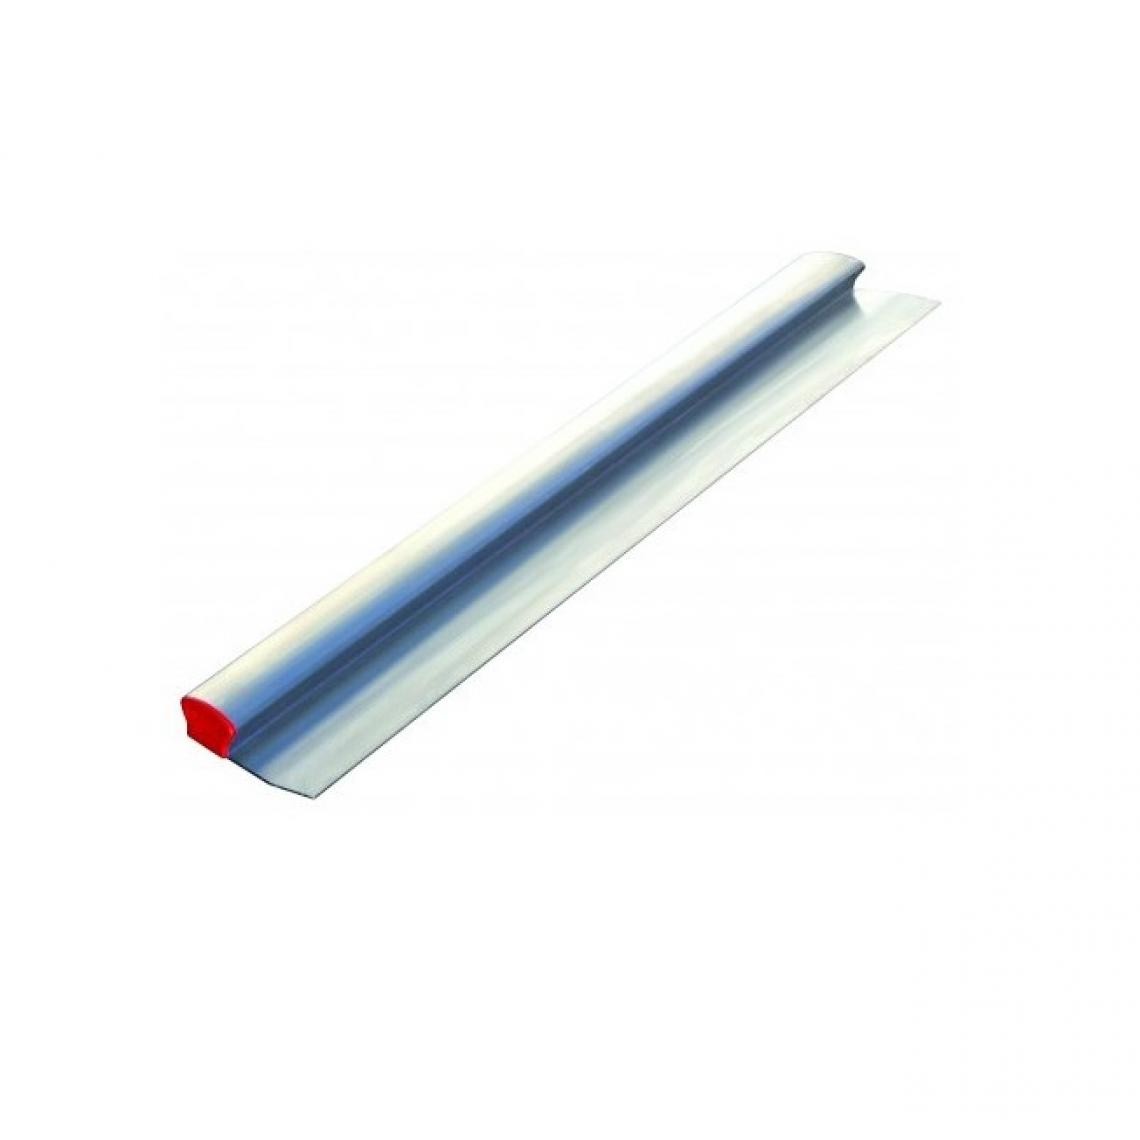 Taliaplast - Taliaplast - Règle en aluminium forme "h" profil fermé 1 m - 380601 - Règles alu, équerres